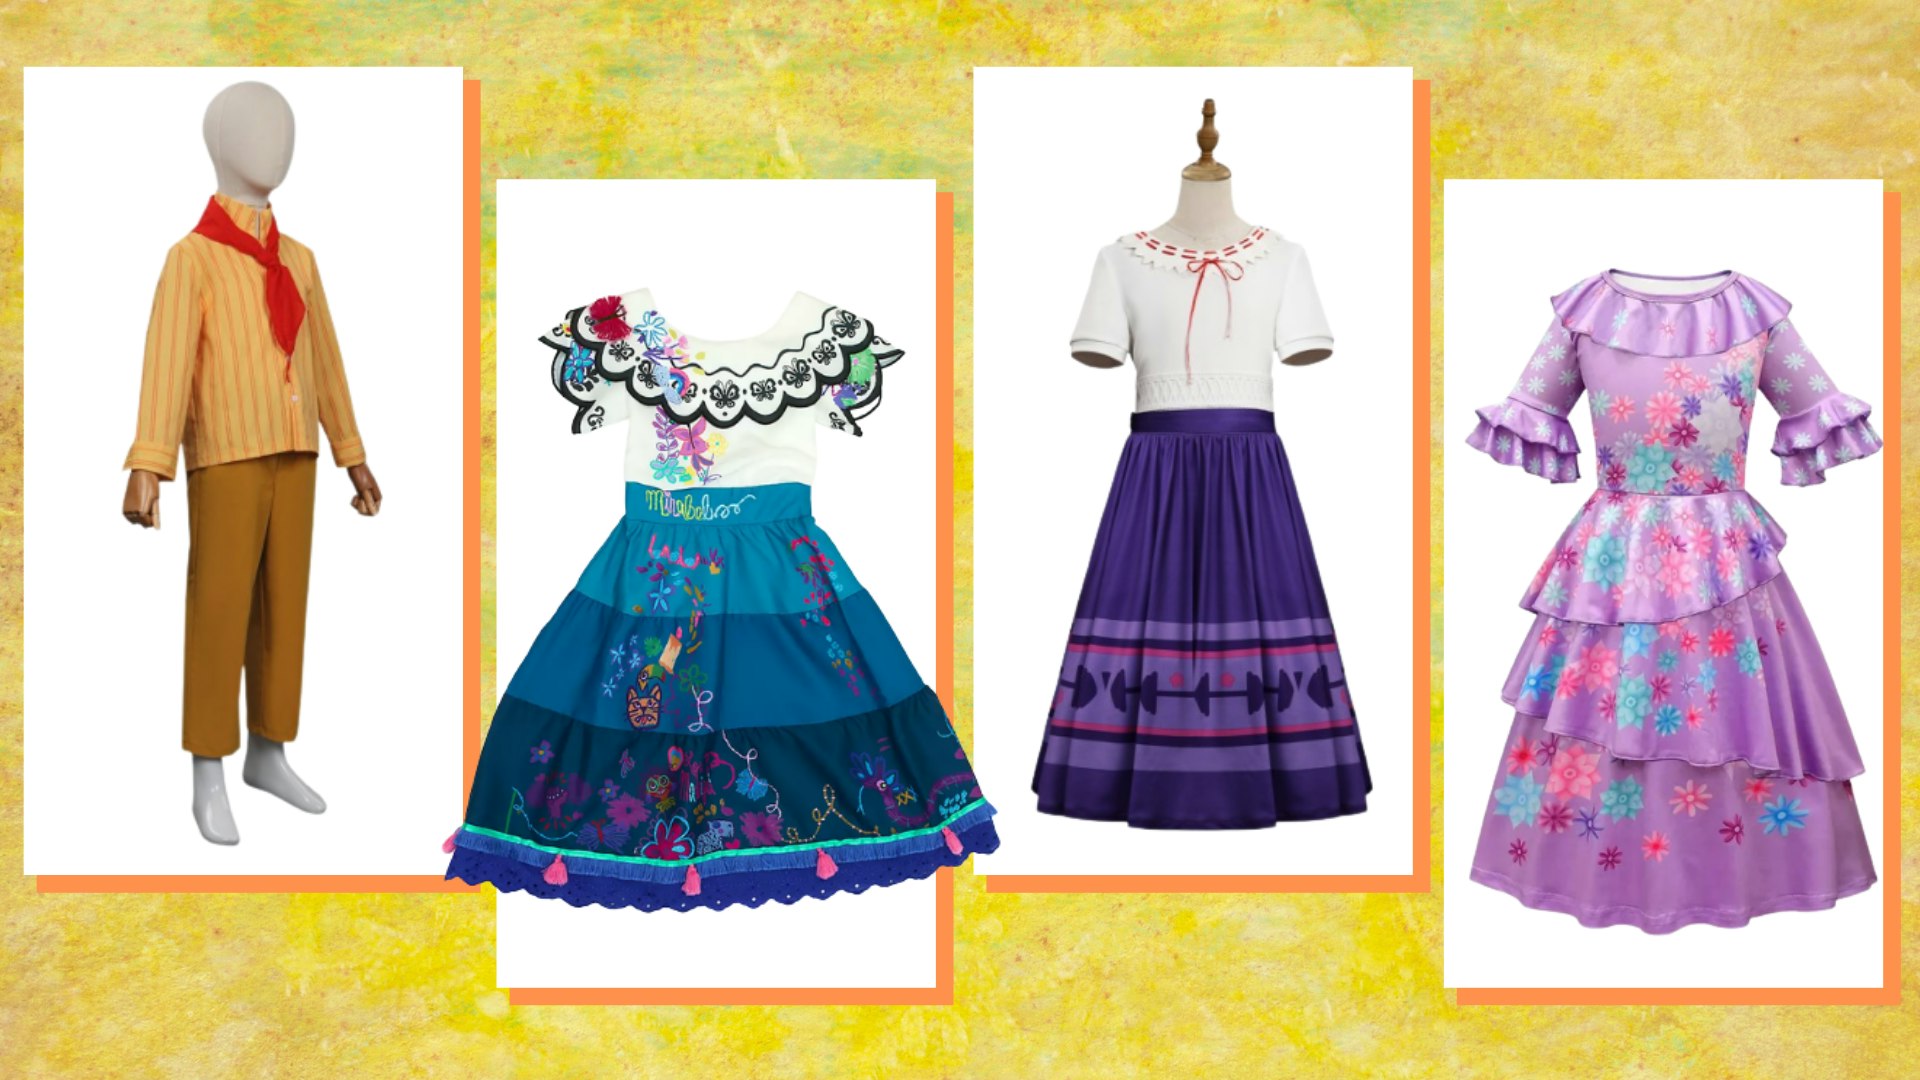 Disney Encanto Movie Isabela Dress Costume For Girls- Fits Sizes 4